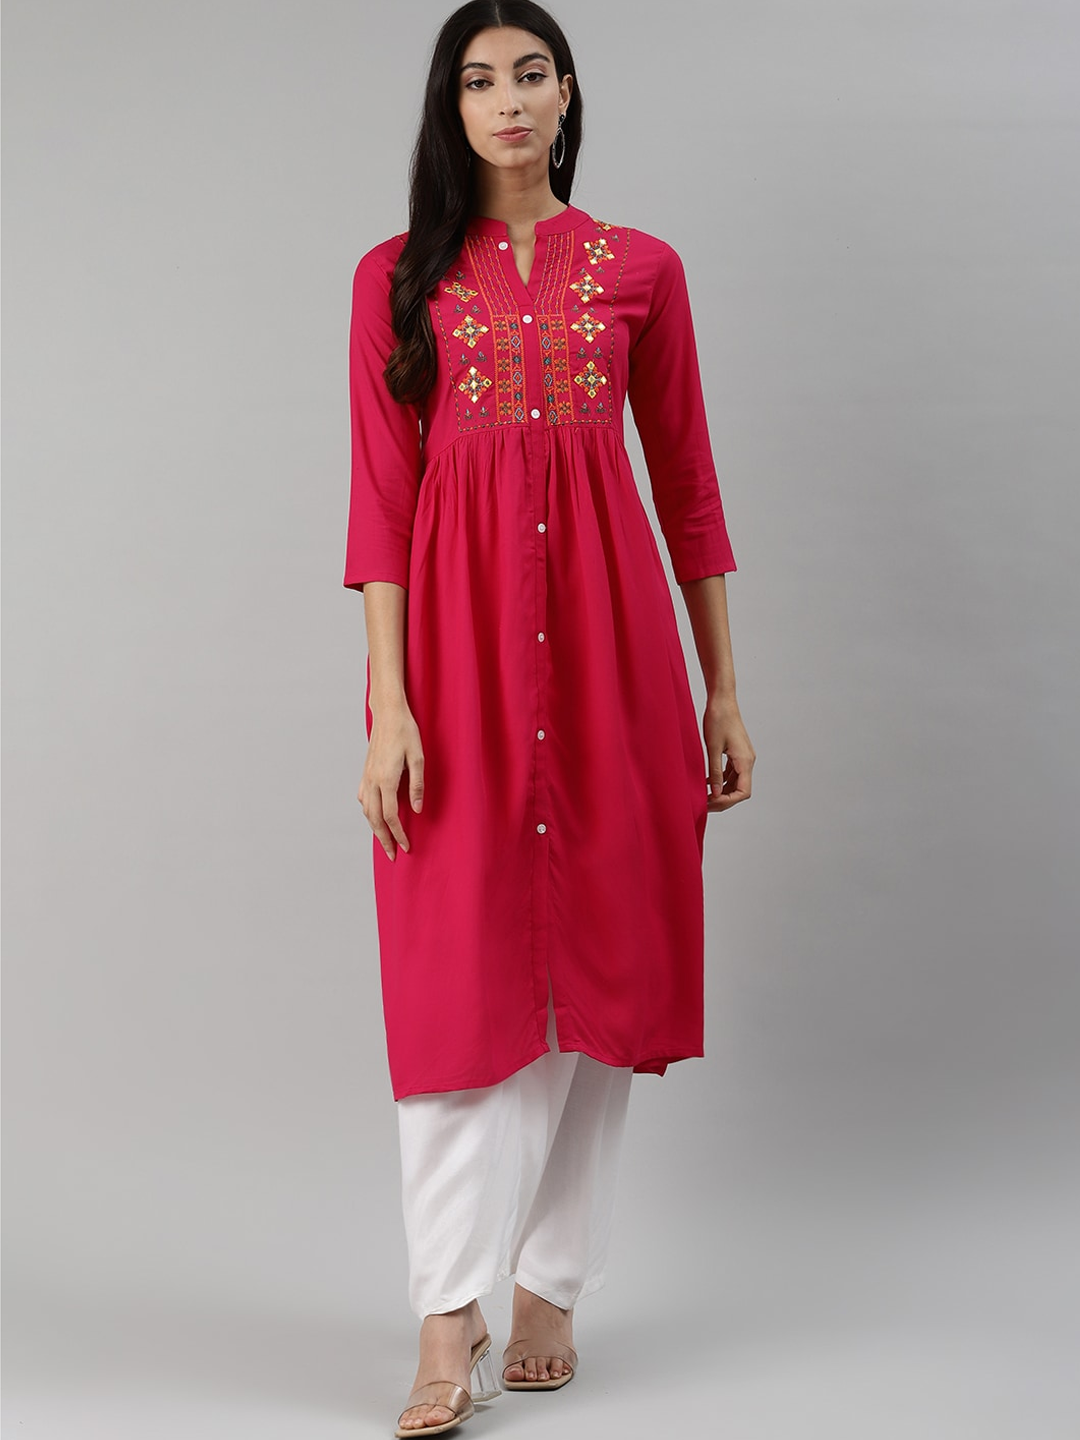 rayon-a-line-pink-embroidered-kurta-ask-208